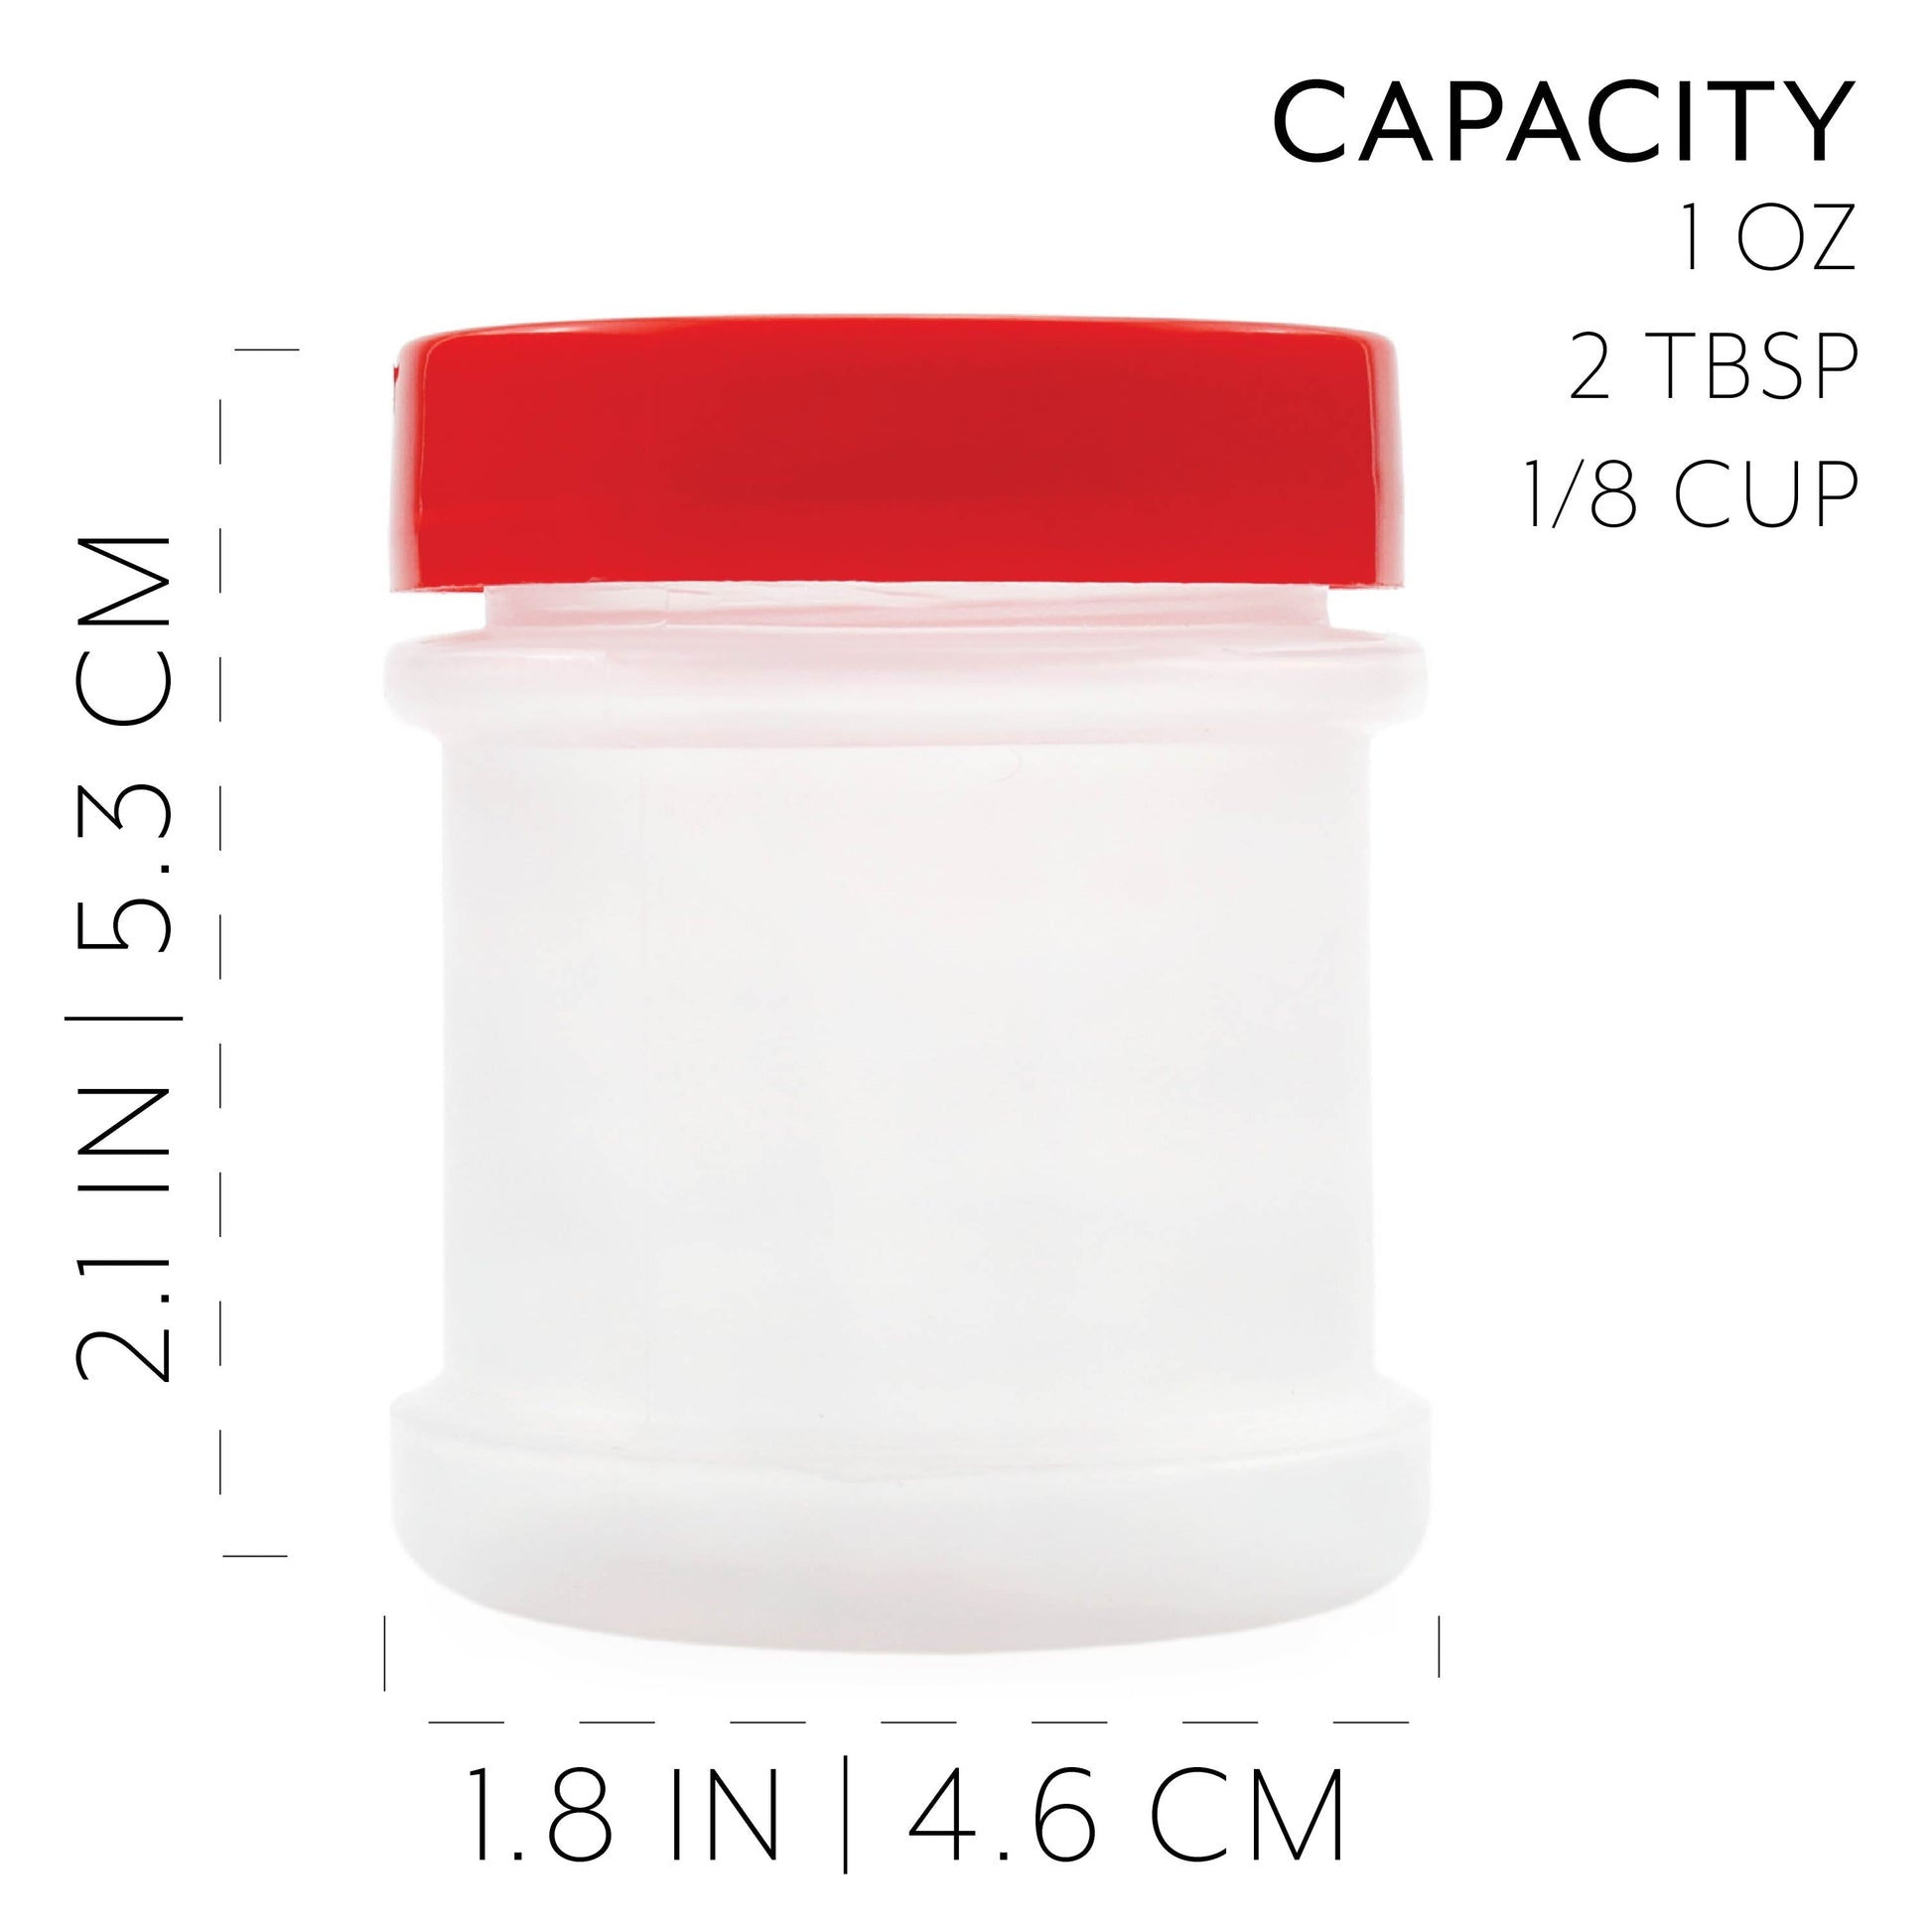 Mini Plastic Spice Jars w/Sifters (12-Pack, Red) - sh1475cb0spice